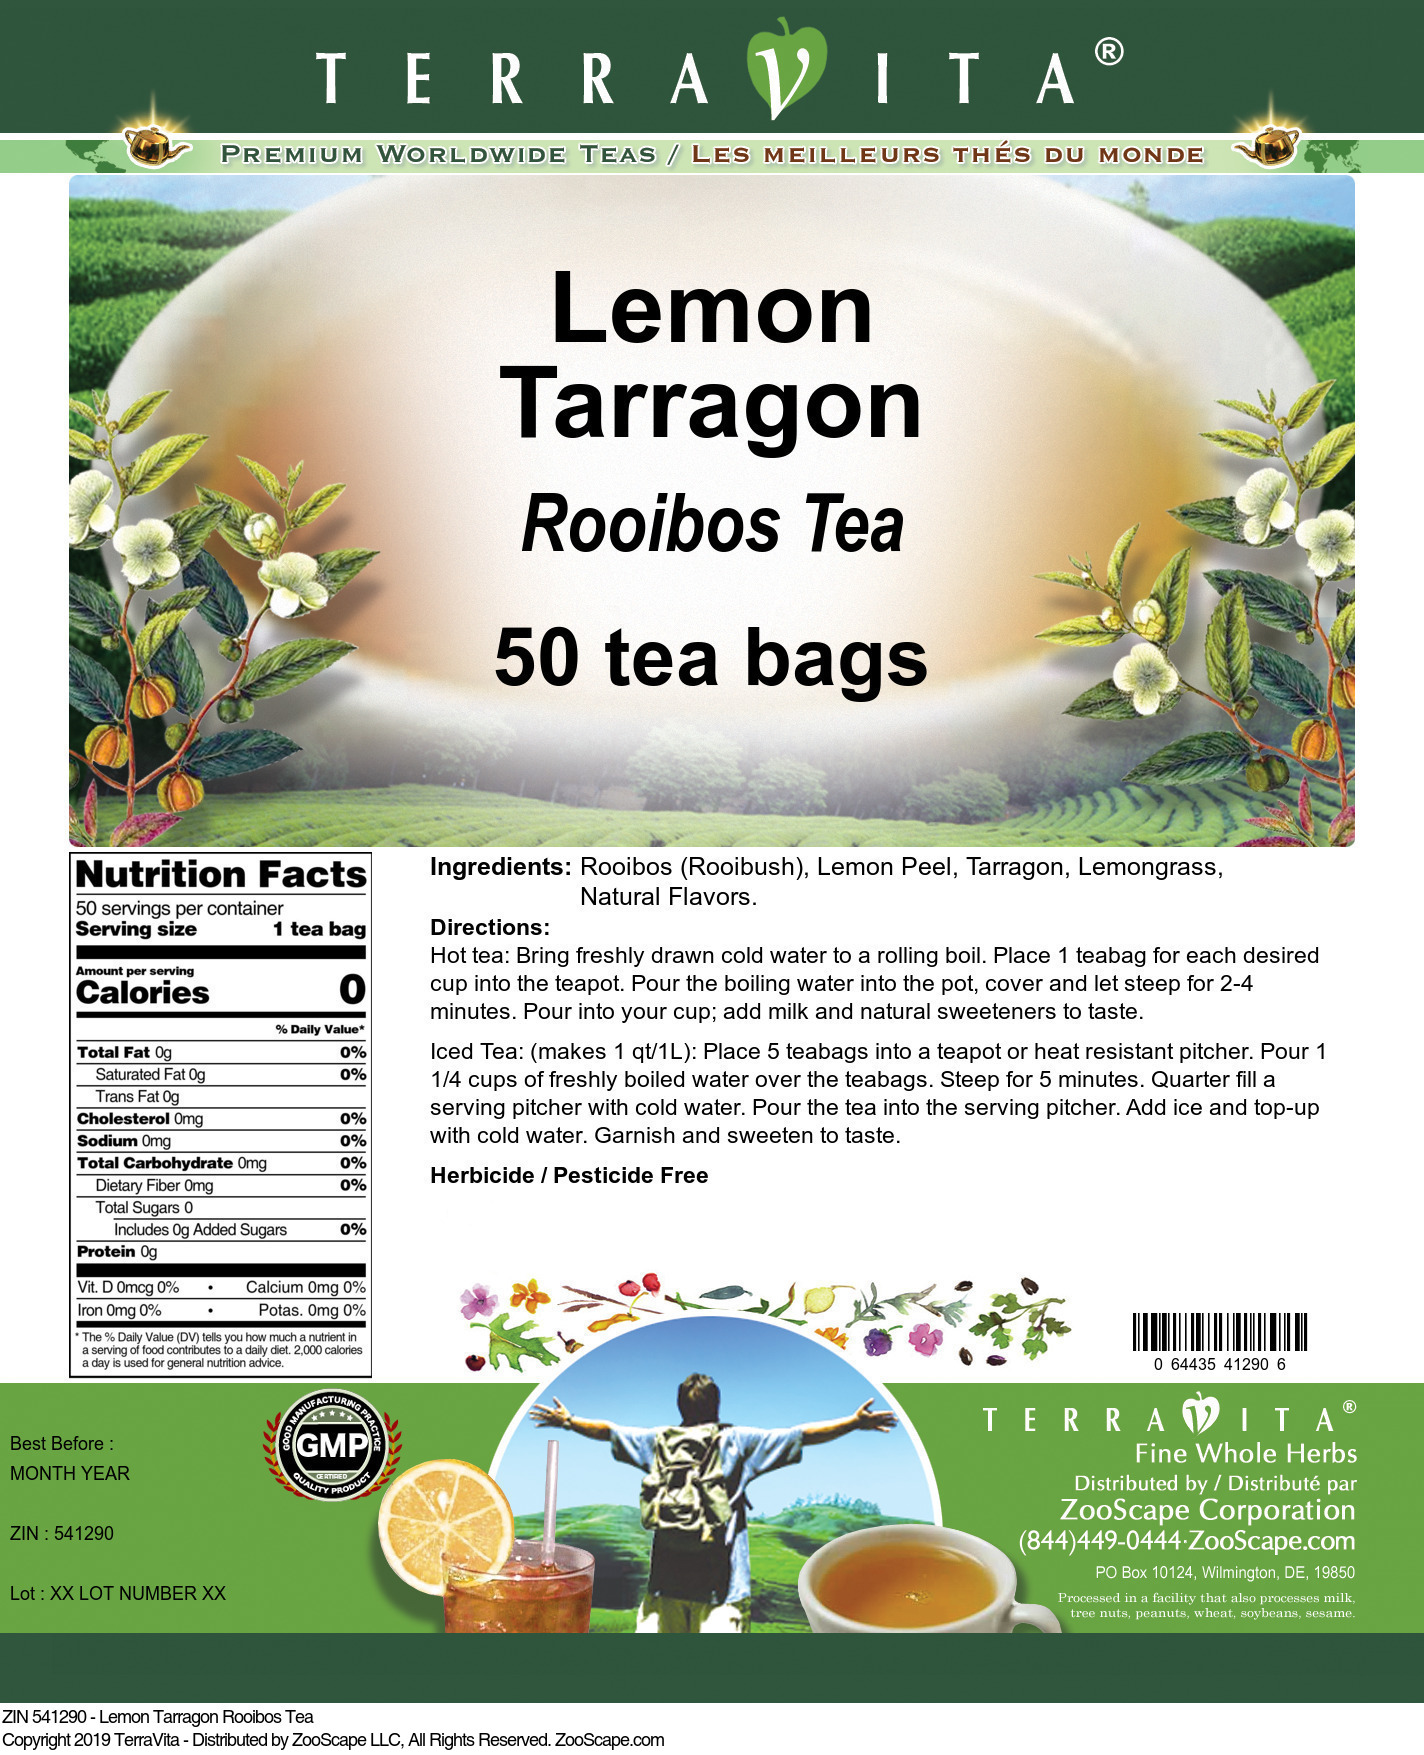 Lemon Tarragon Rooibos Tea - Label